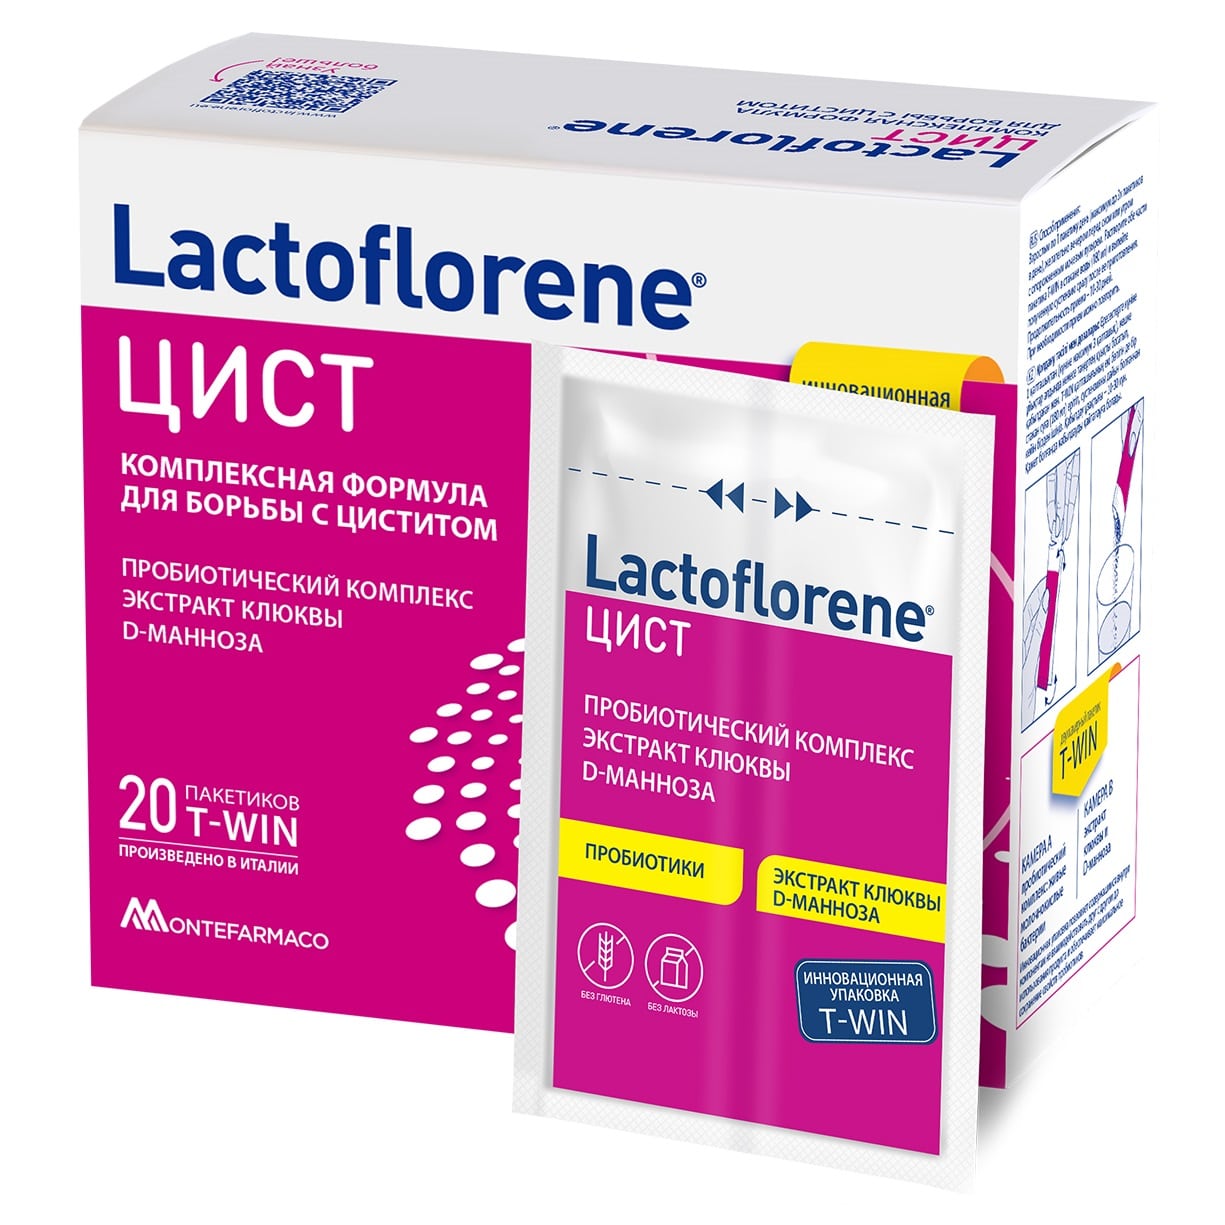 Lactoflorene Пробиотический комплекс Цист, 20 пакетиков (Lactoflorene, ) биологически активная добавка lactoflorene цист 20 шт